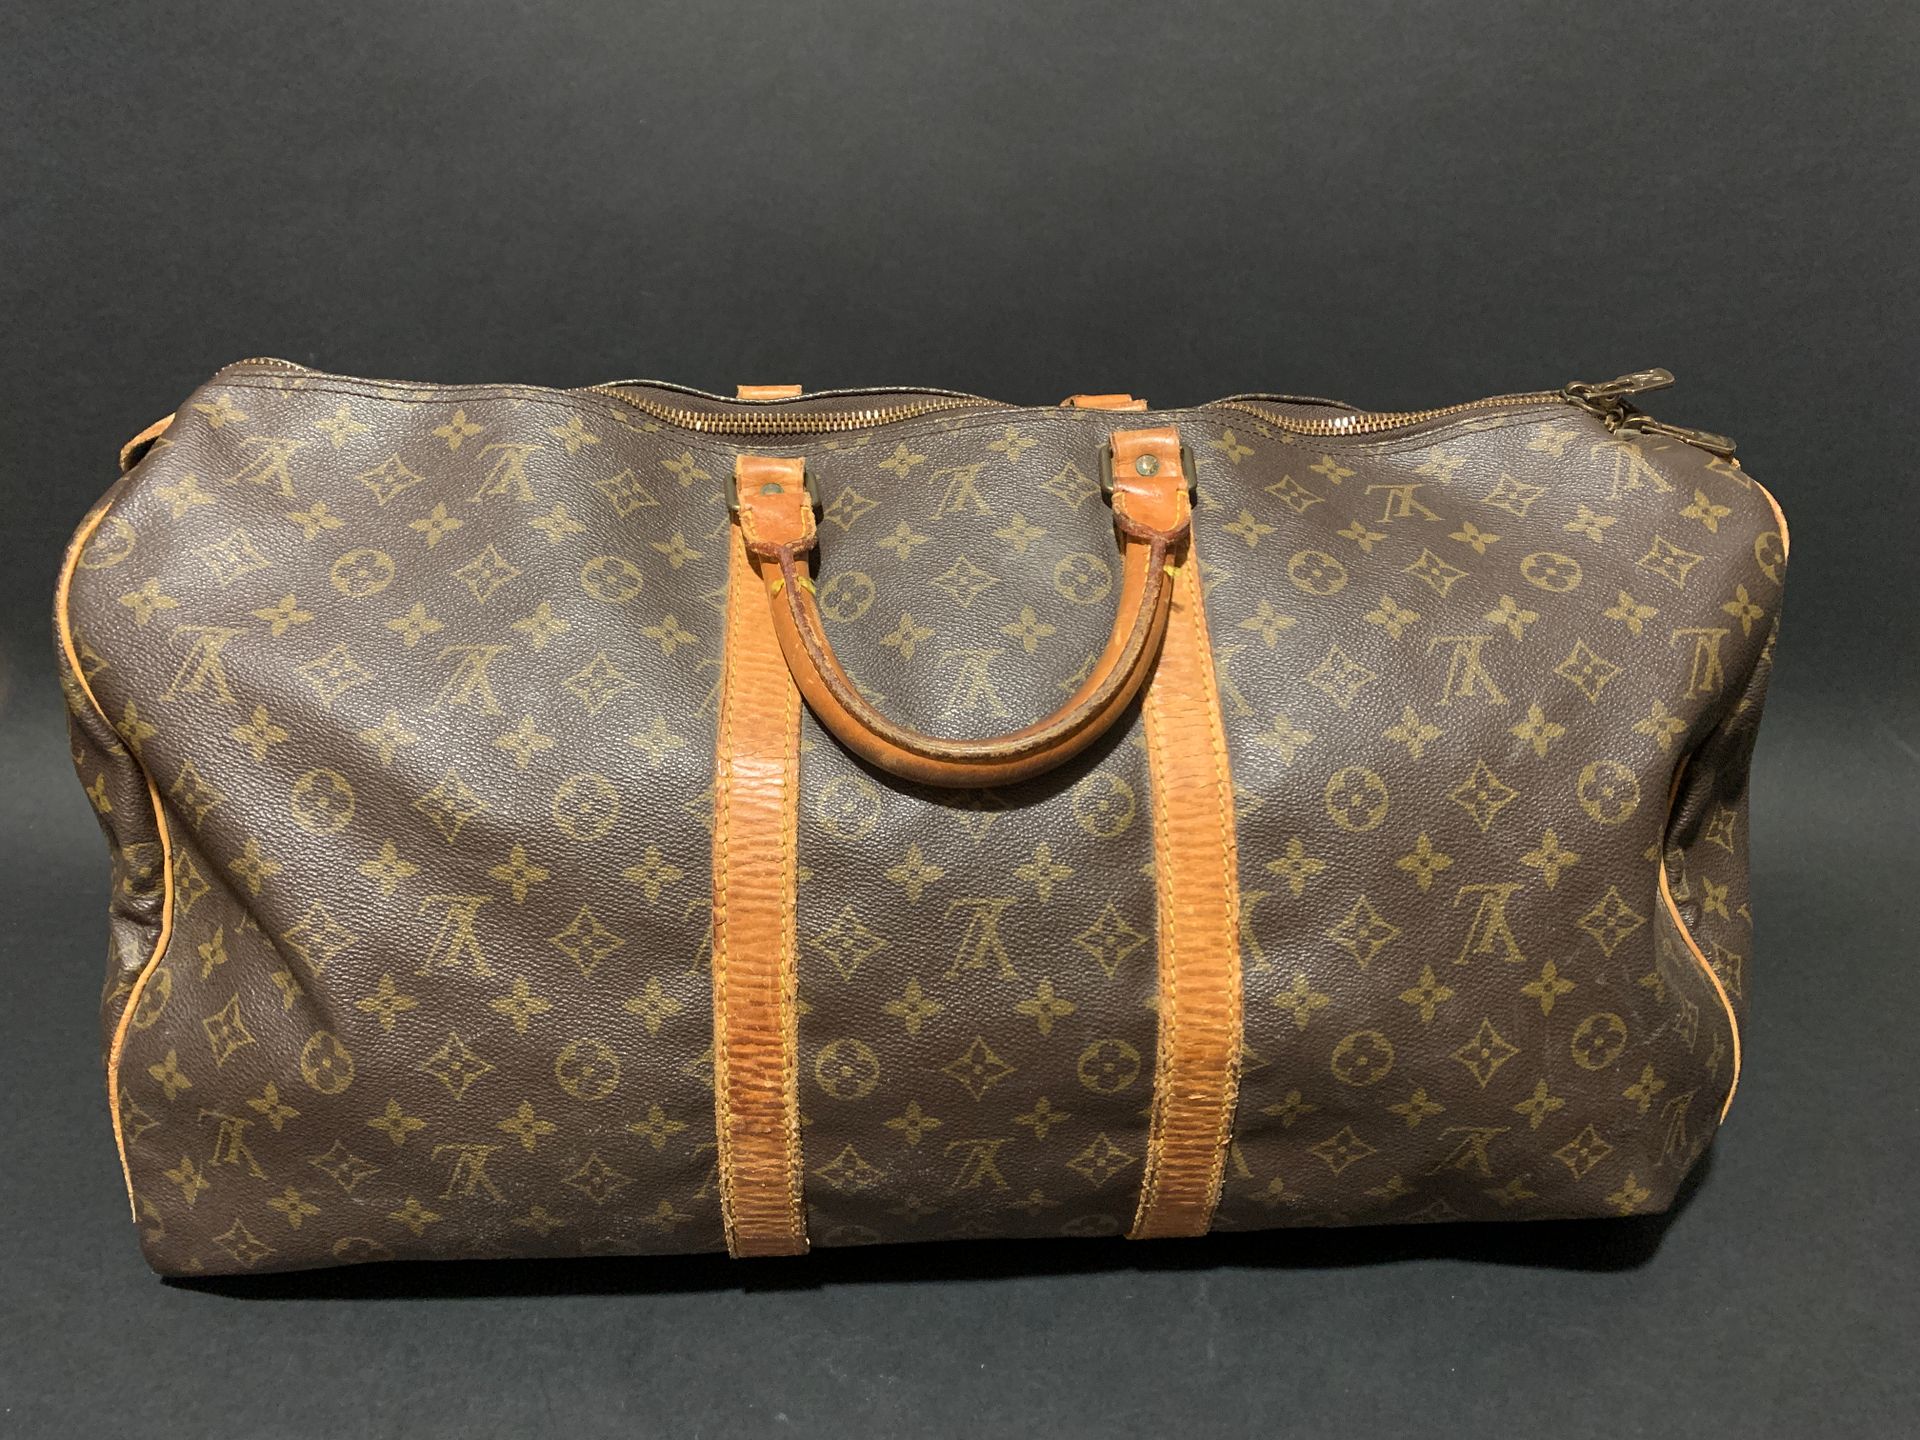 LOUIS VUITTON. Travel bag, Keepall model, monogrammed …